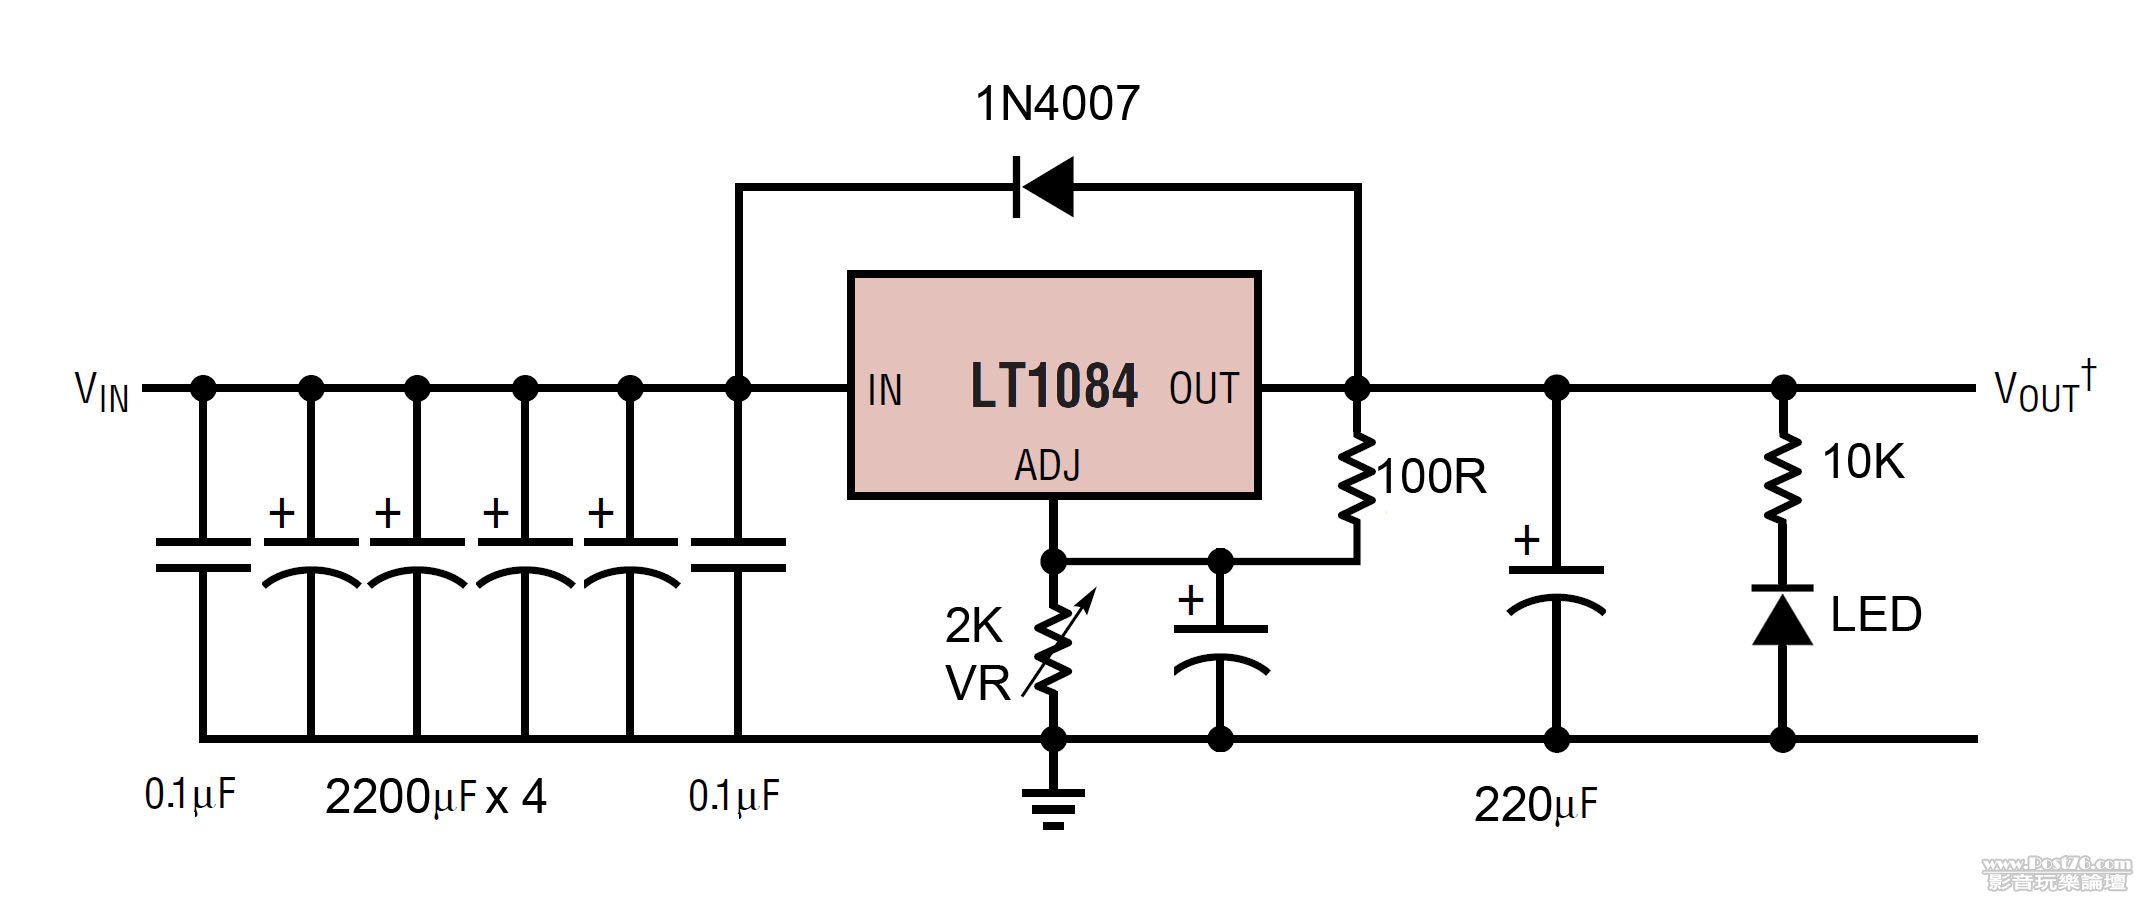 LT 1084 circuit.jpg